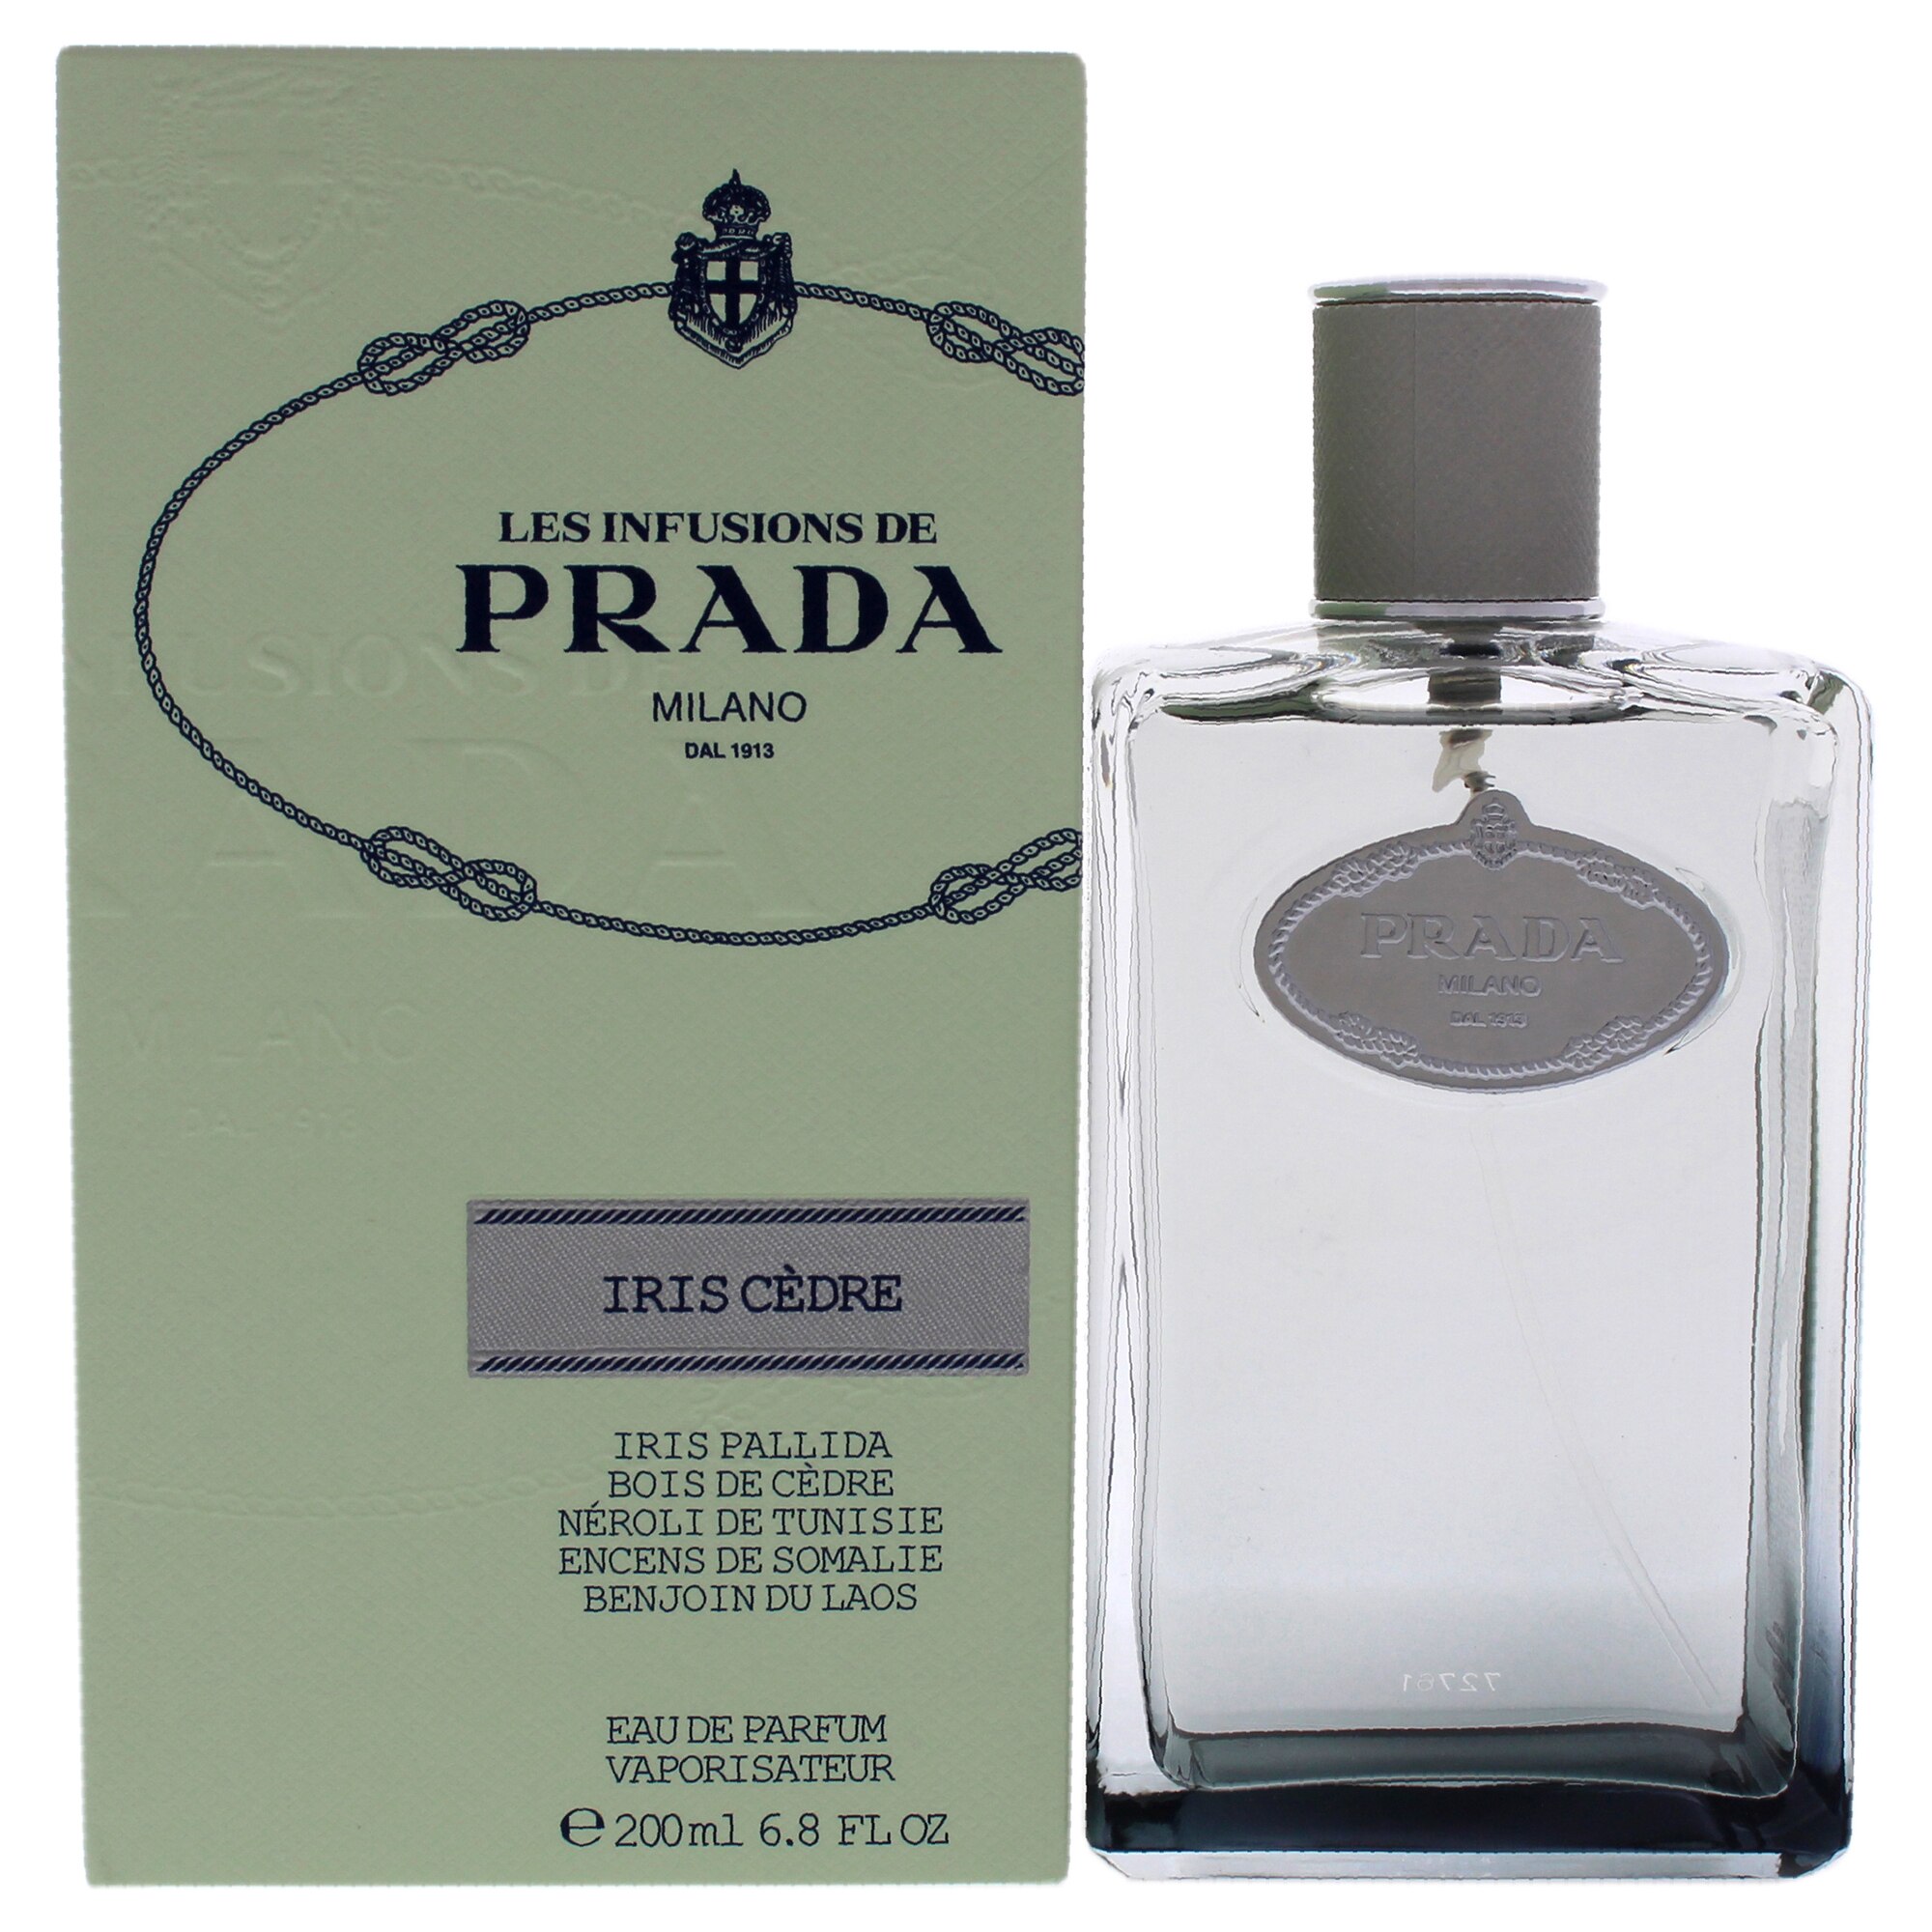 Infusion Diris Cedre by Prada for Women - 6.8 oz EDP Spray